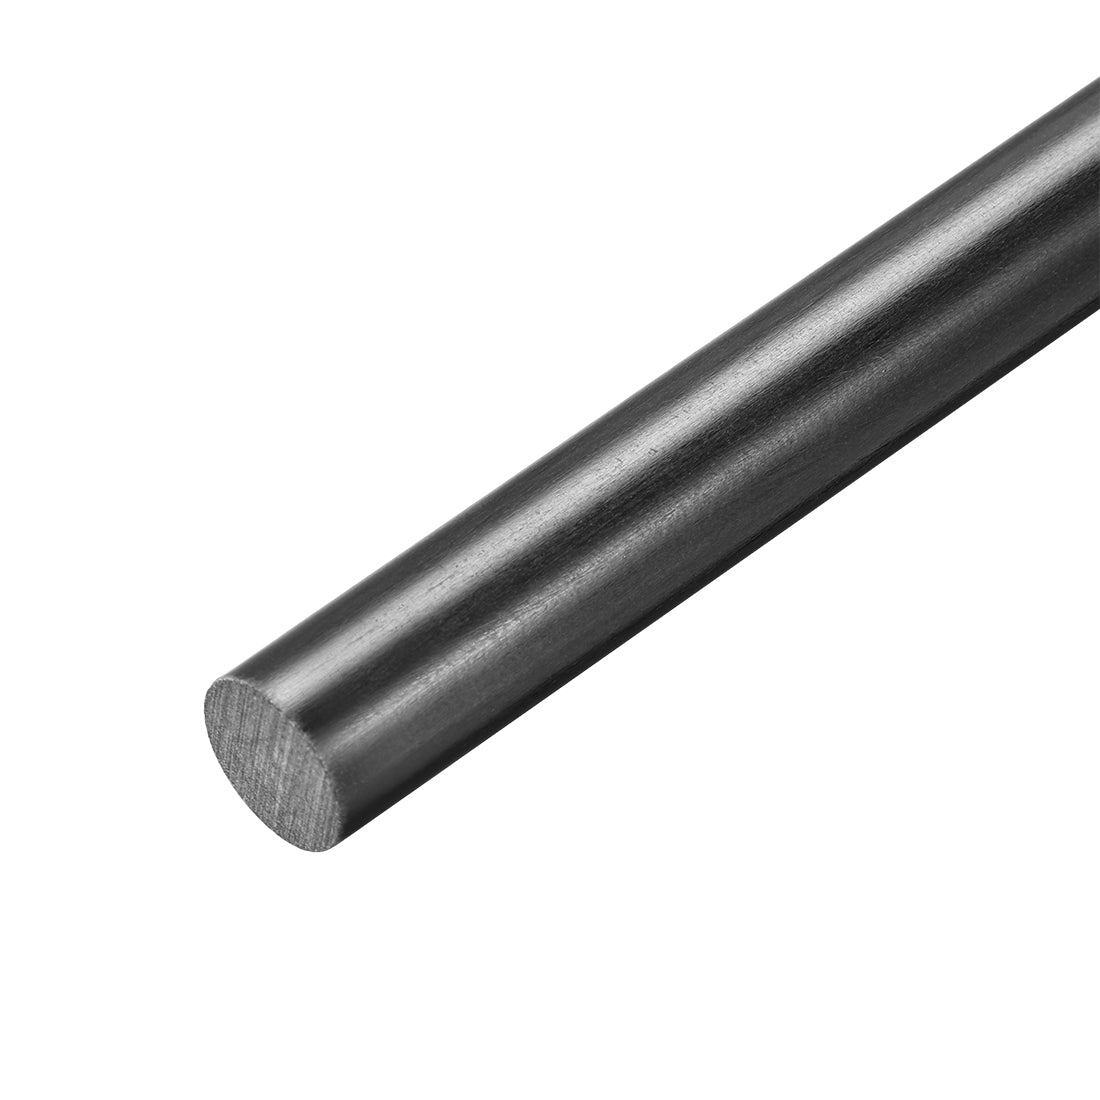 uxcell Uxcell FRP Fiberglass Round Rod,12mm Dia 50cm Long Black Engineering Round Bars